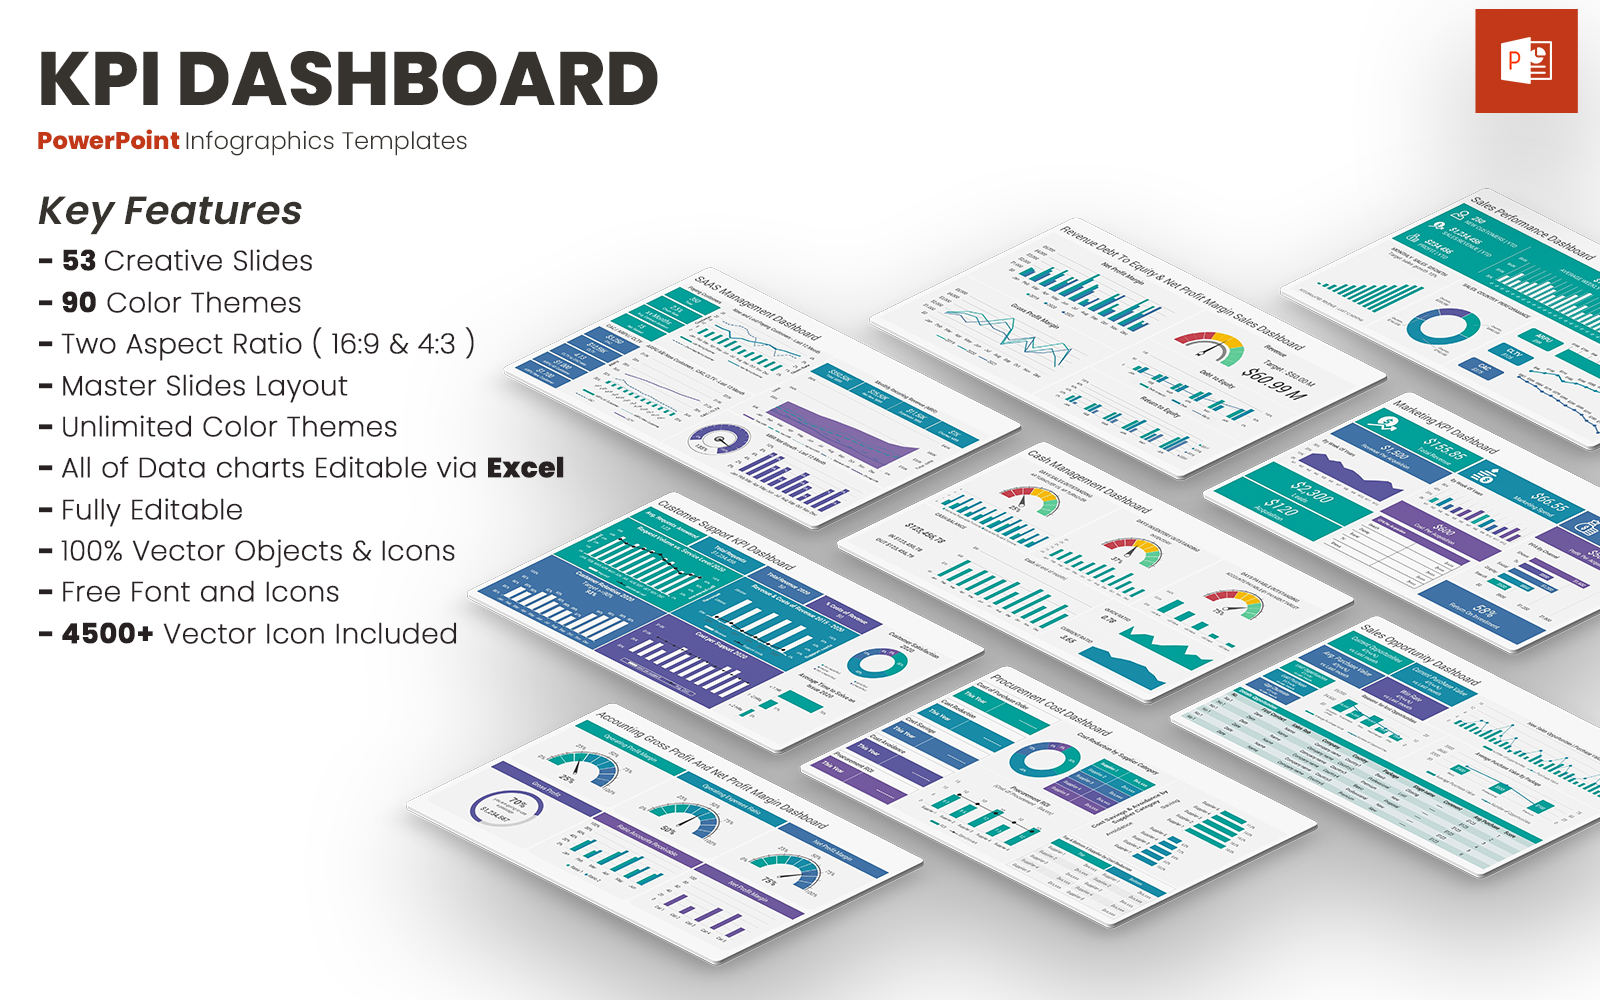 KPI Dashboard PowerPoint Templates